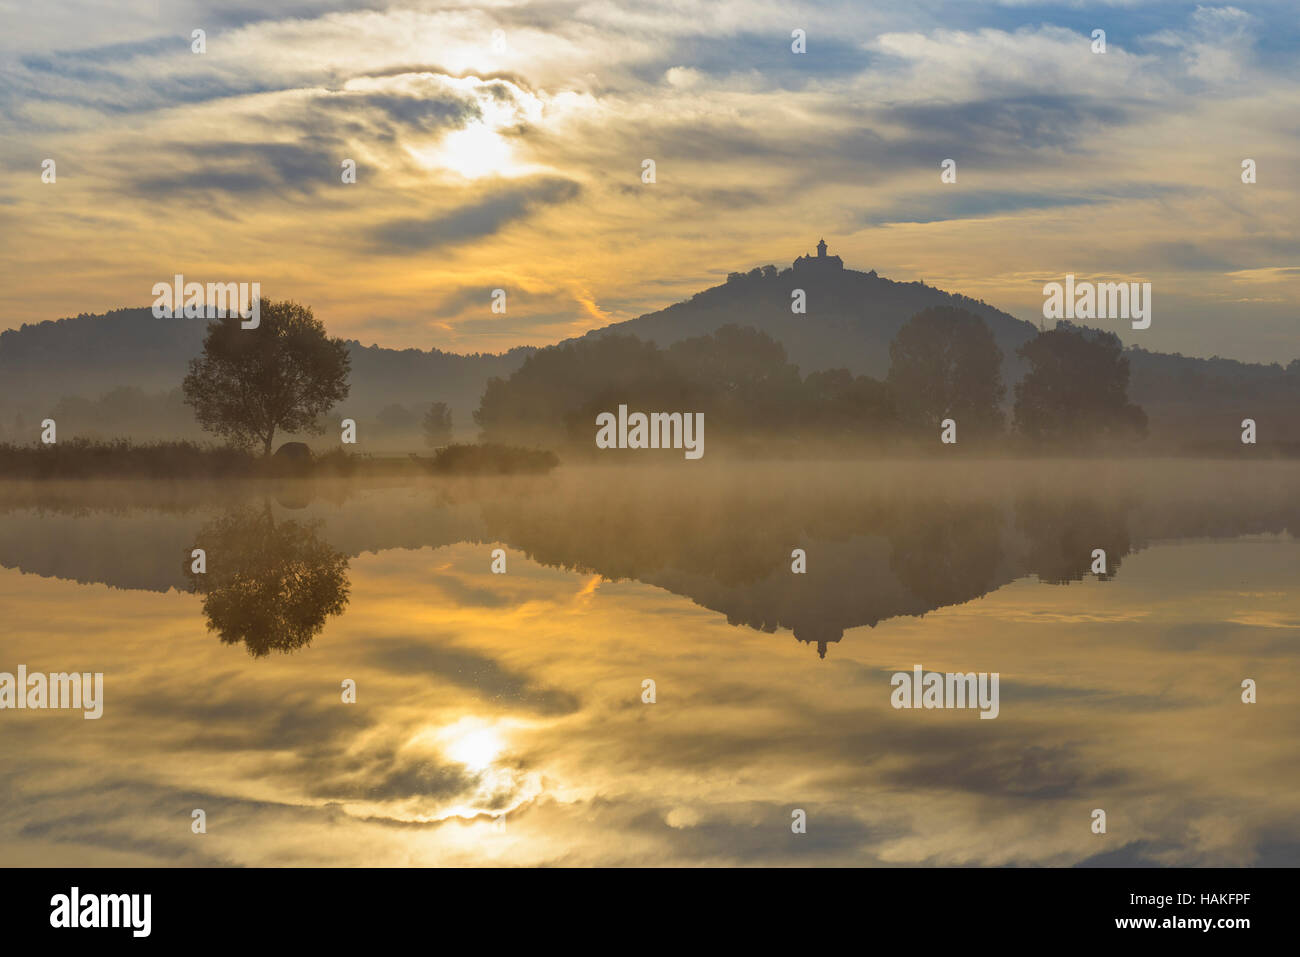 Wachsenburg Castle at Sunrise Reflecting in Lake, Drei Gleichen, Ilm District, Thuringia, Germany Stock Photo